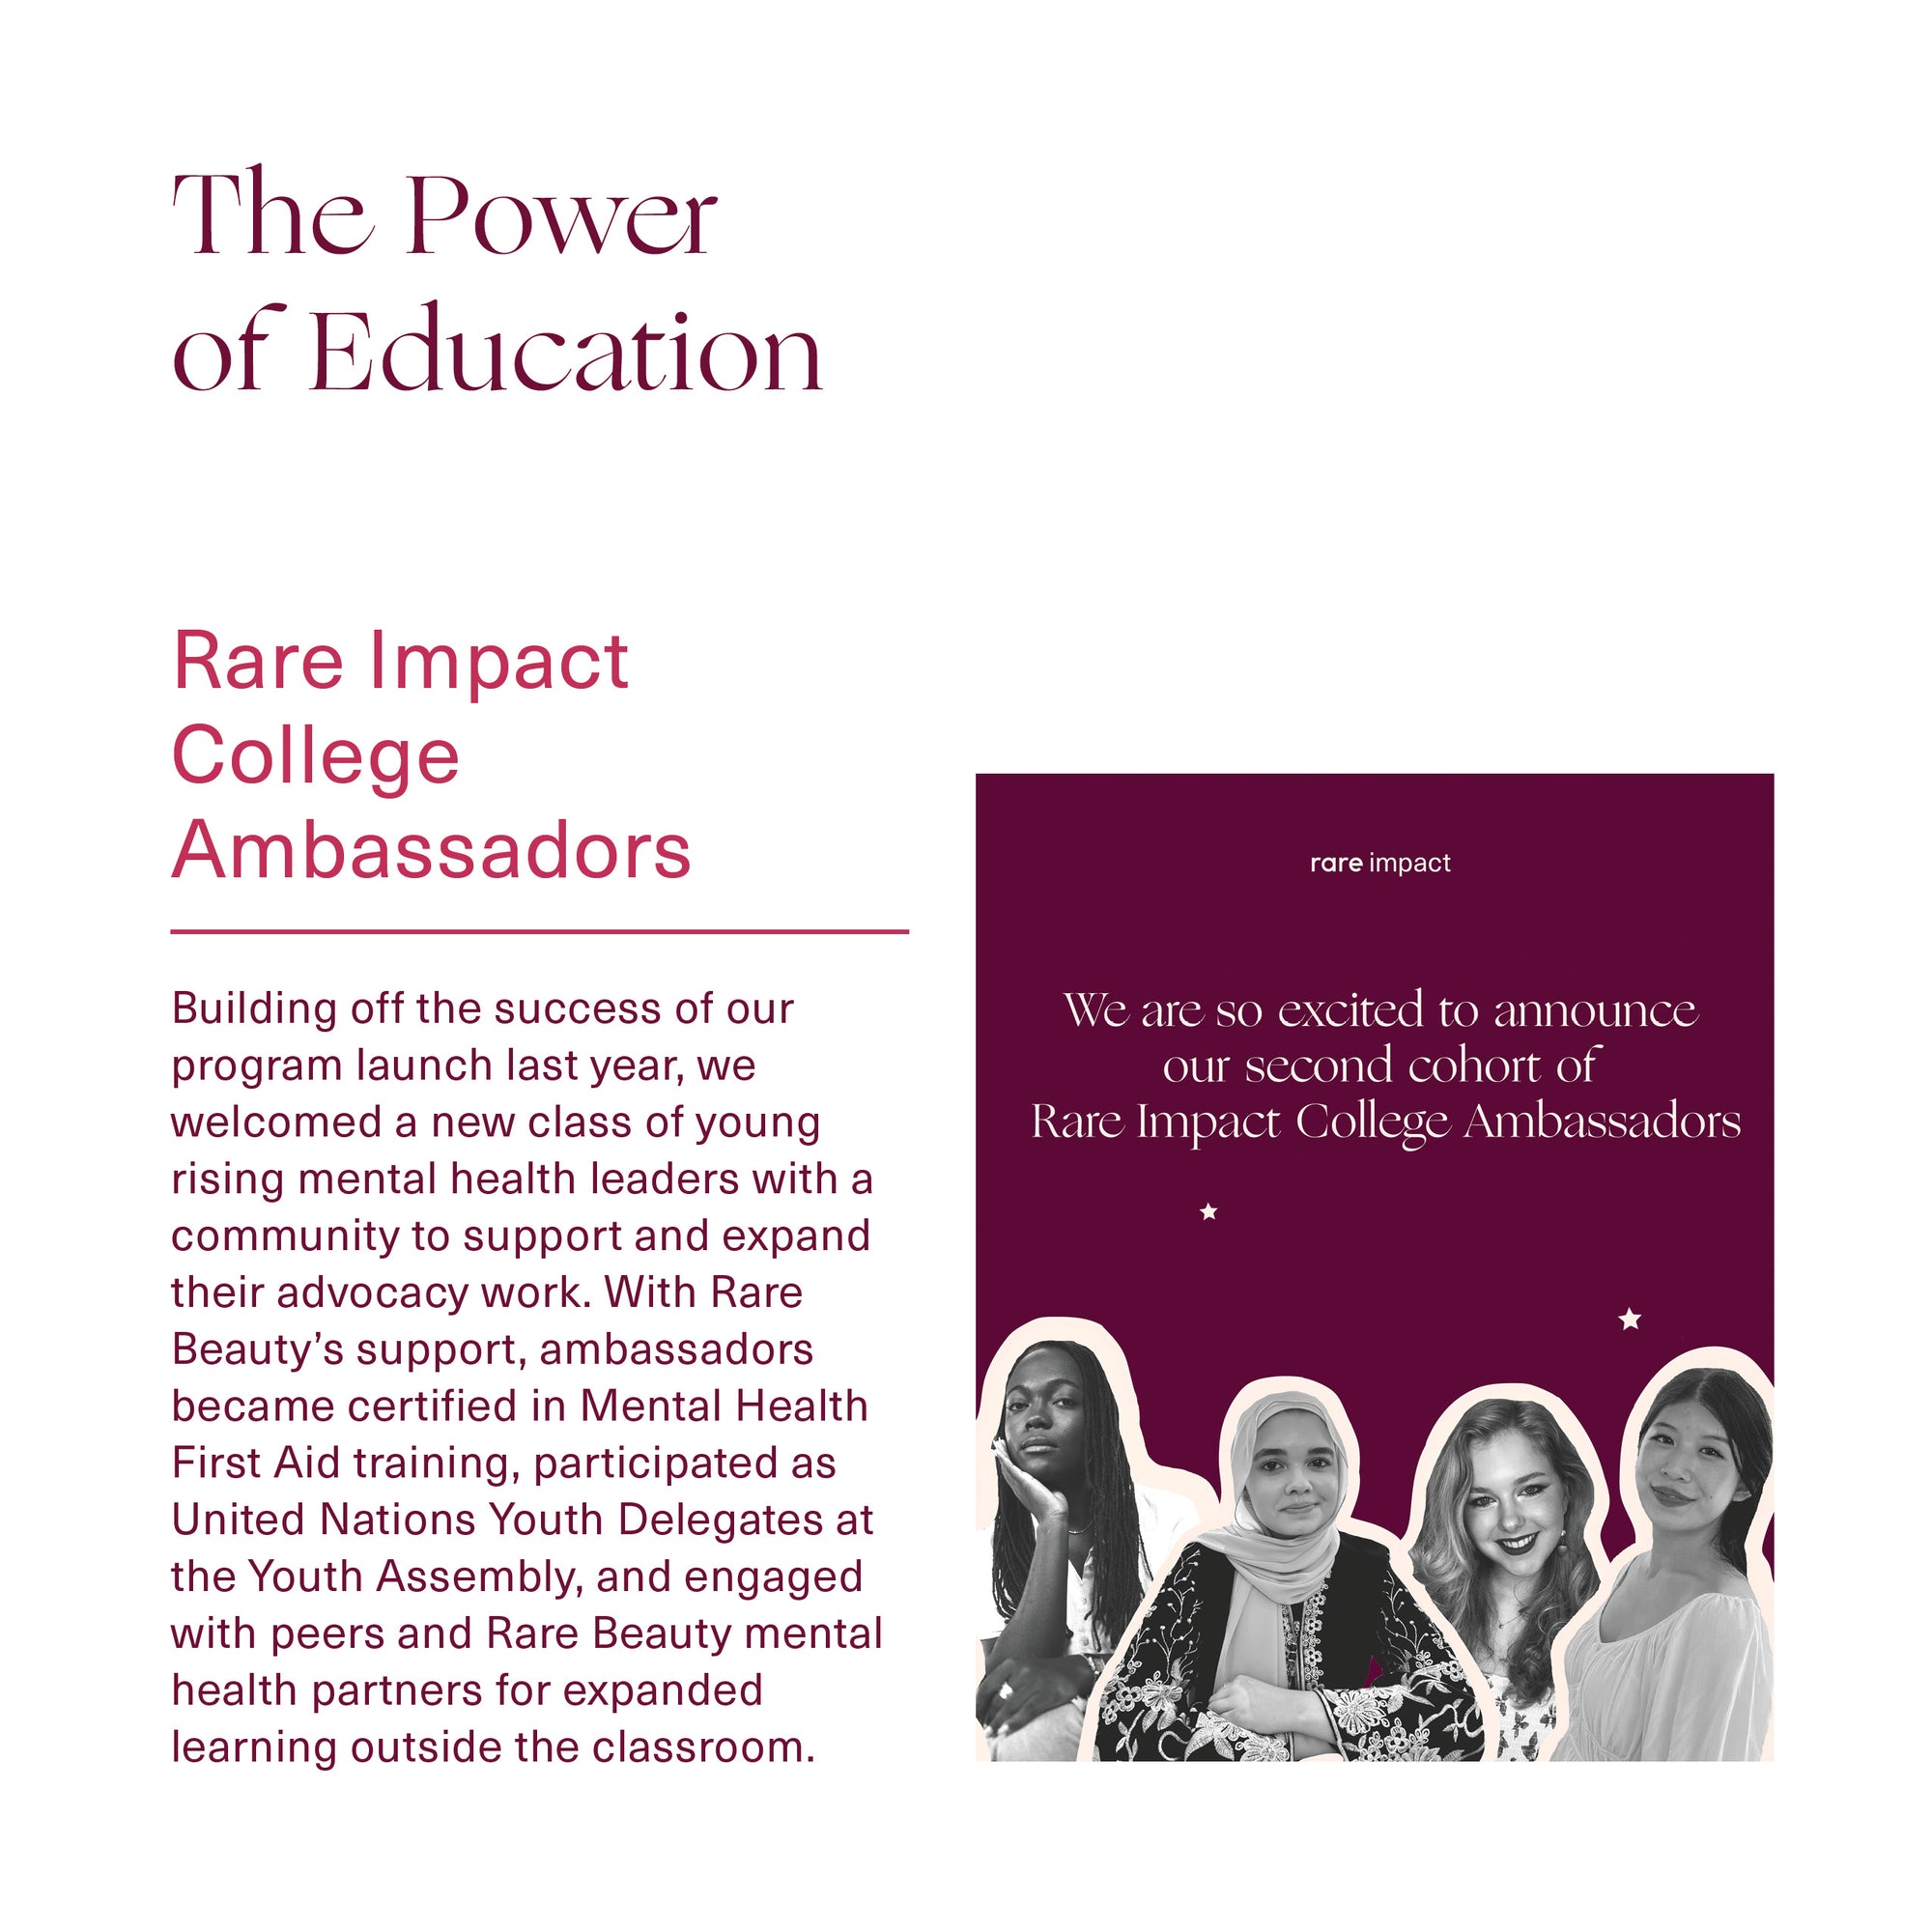 The Power of Education - Rare Impact College ambassadors